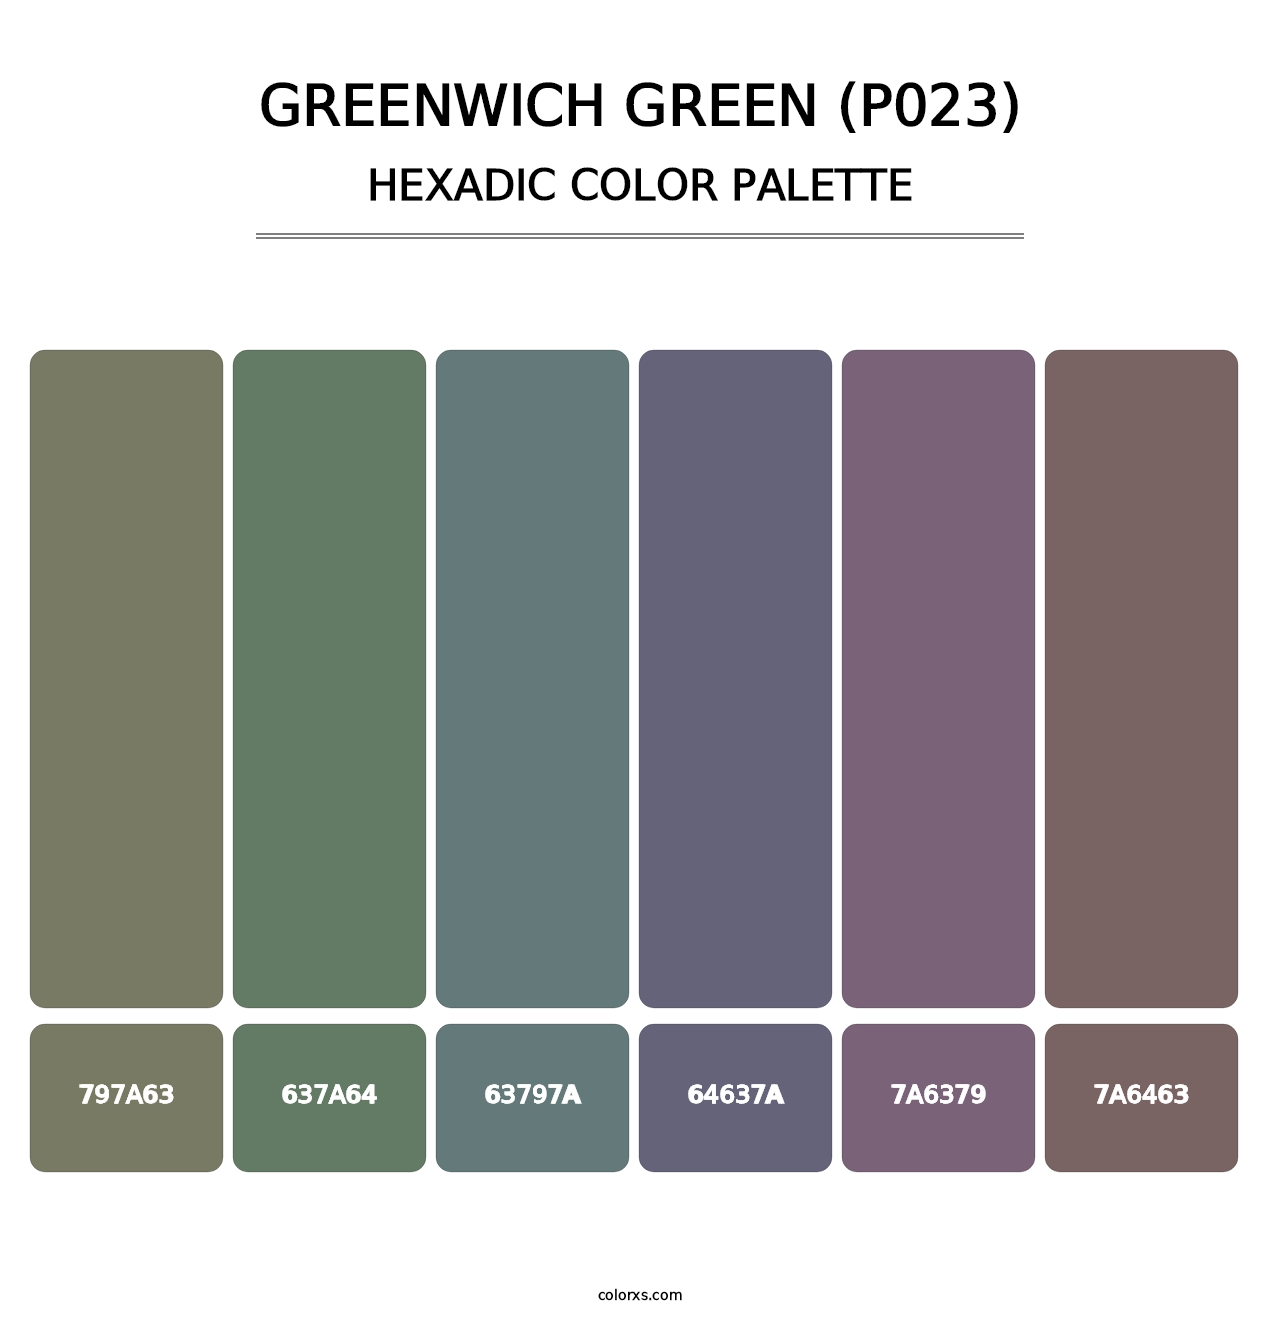 Greenwich Green (P023) - Hexadic Color Palette